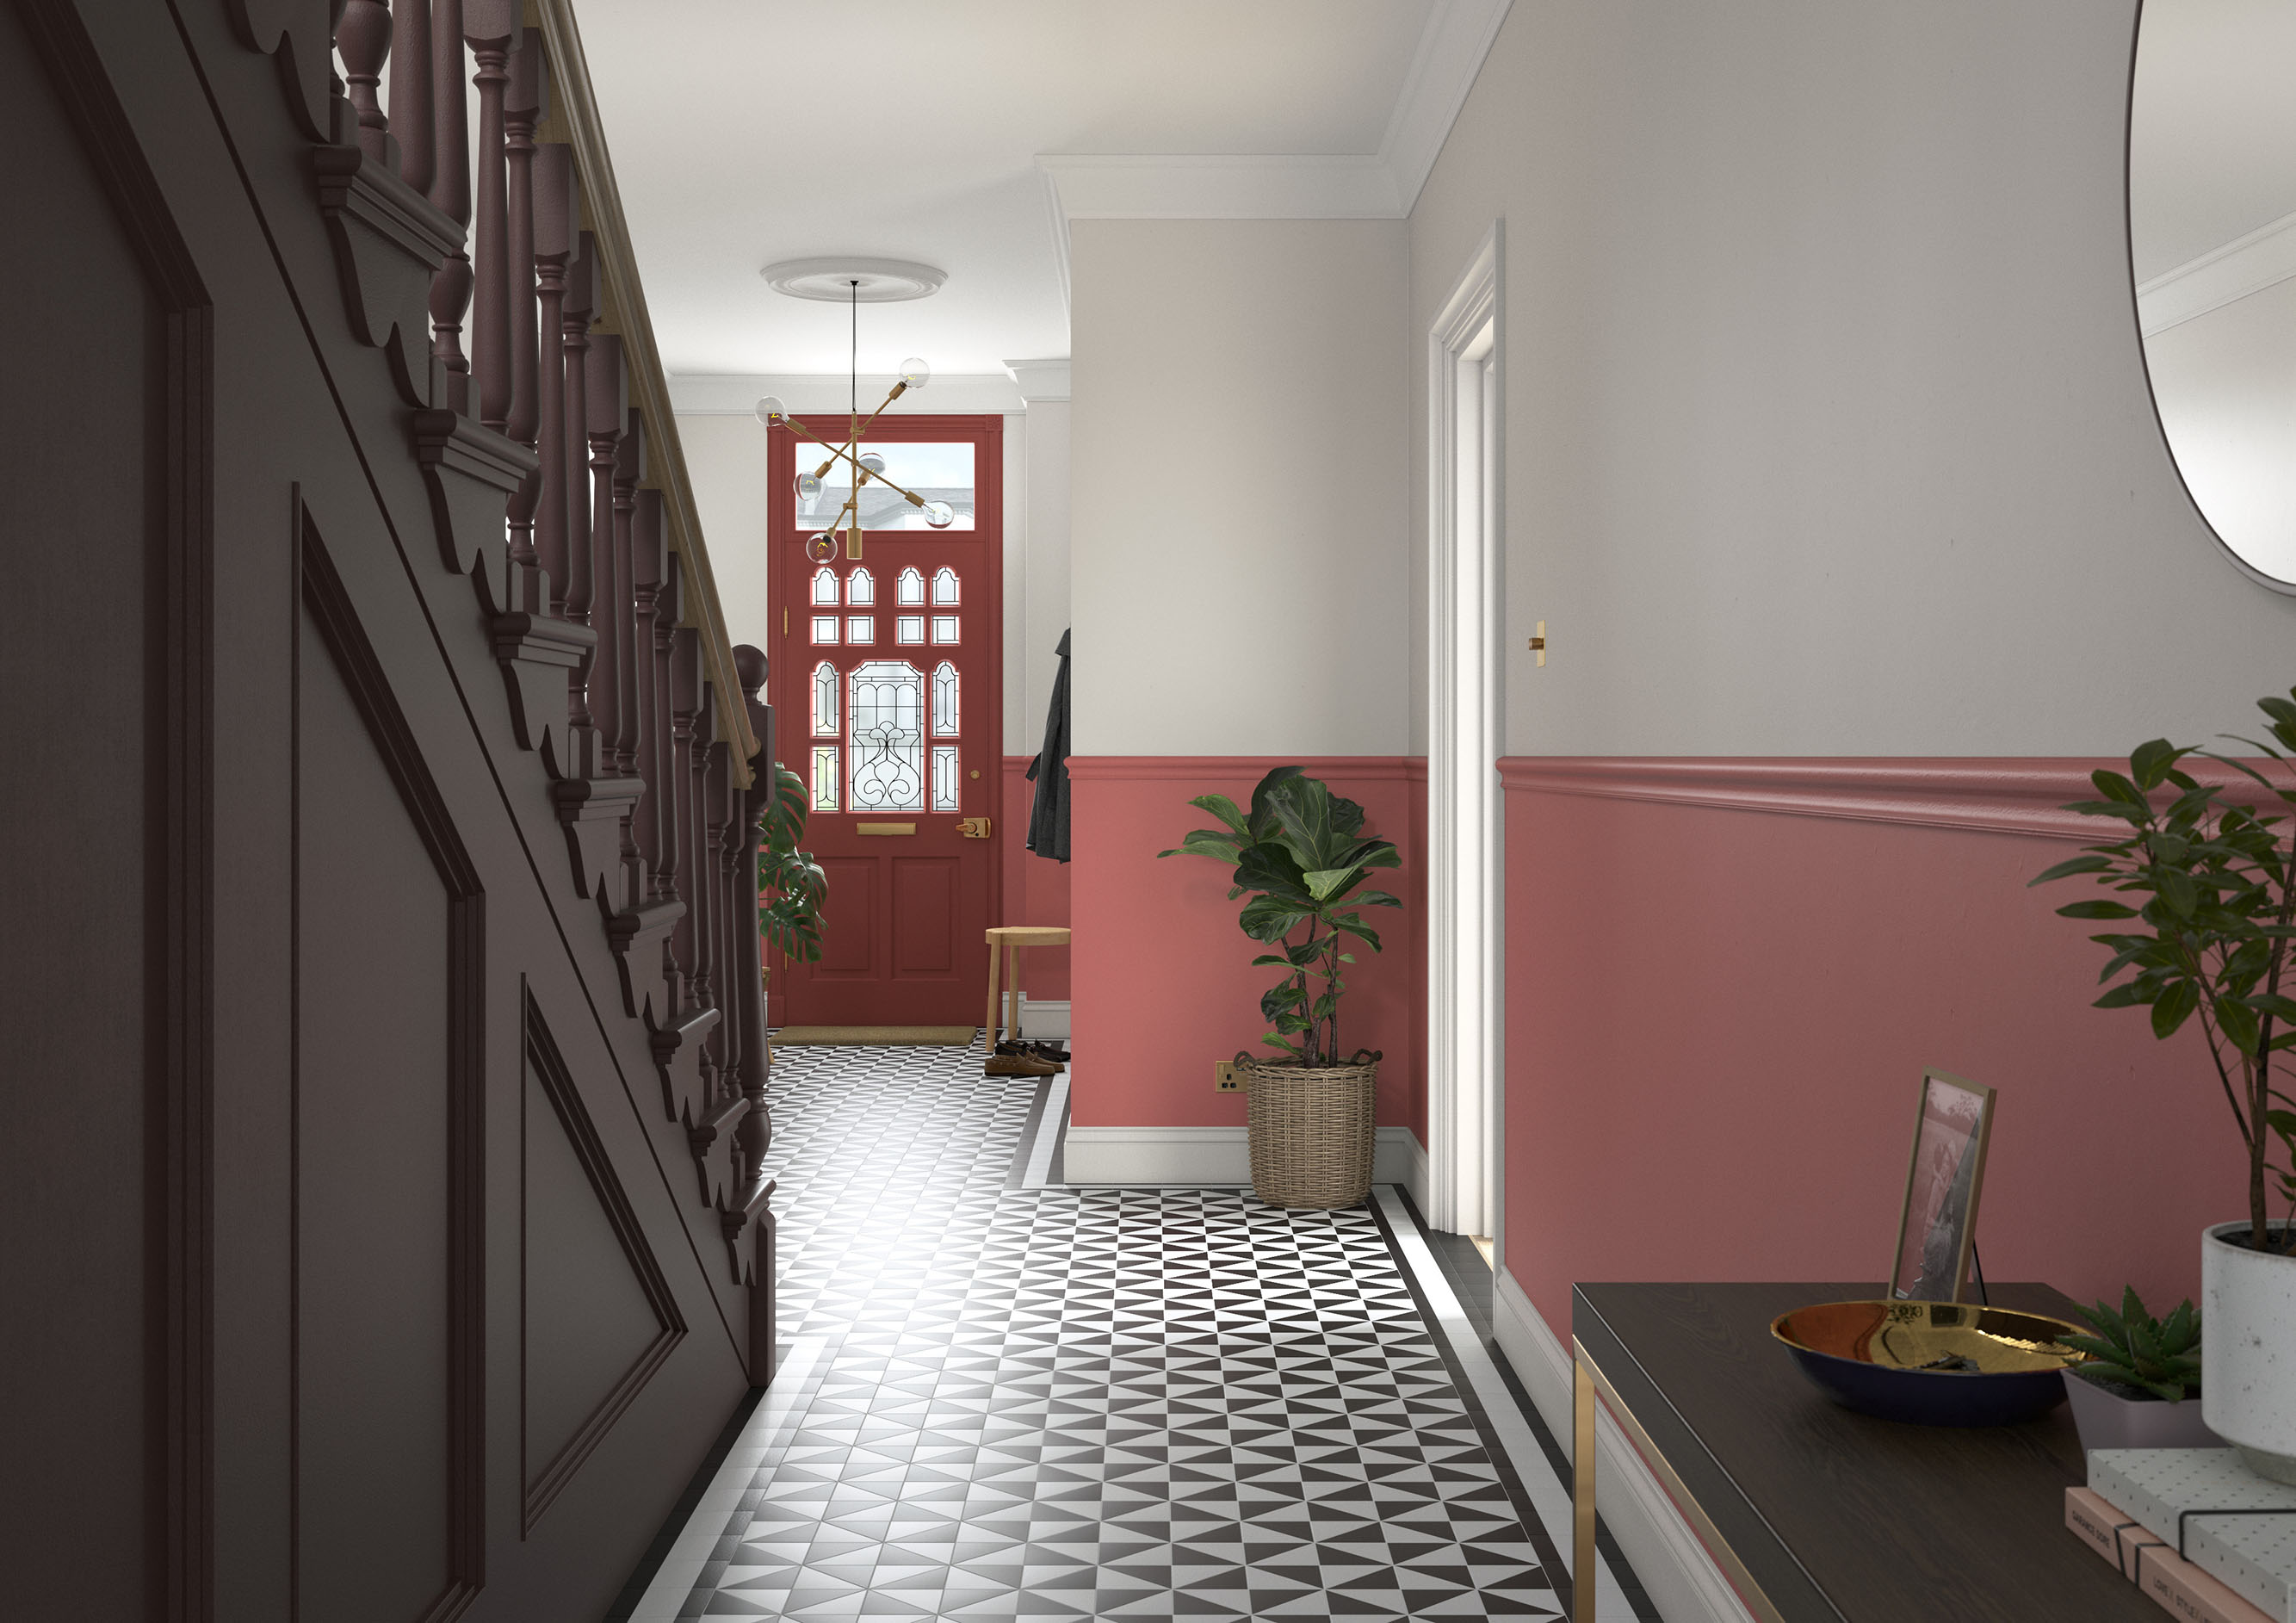 Hallway   Lowerwall   Coral Pink, Upperwall   Pale Nutmeg, Stairs   Cherry Truffle, Skirting   Roman White, Door   Red Ochre, Ceiling   Roman White0000